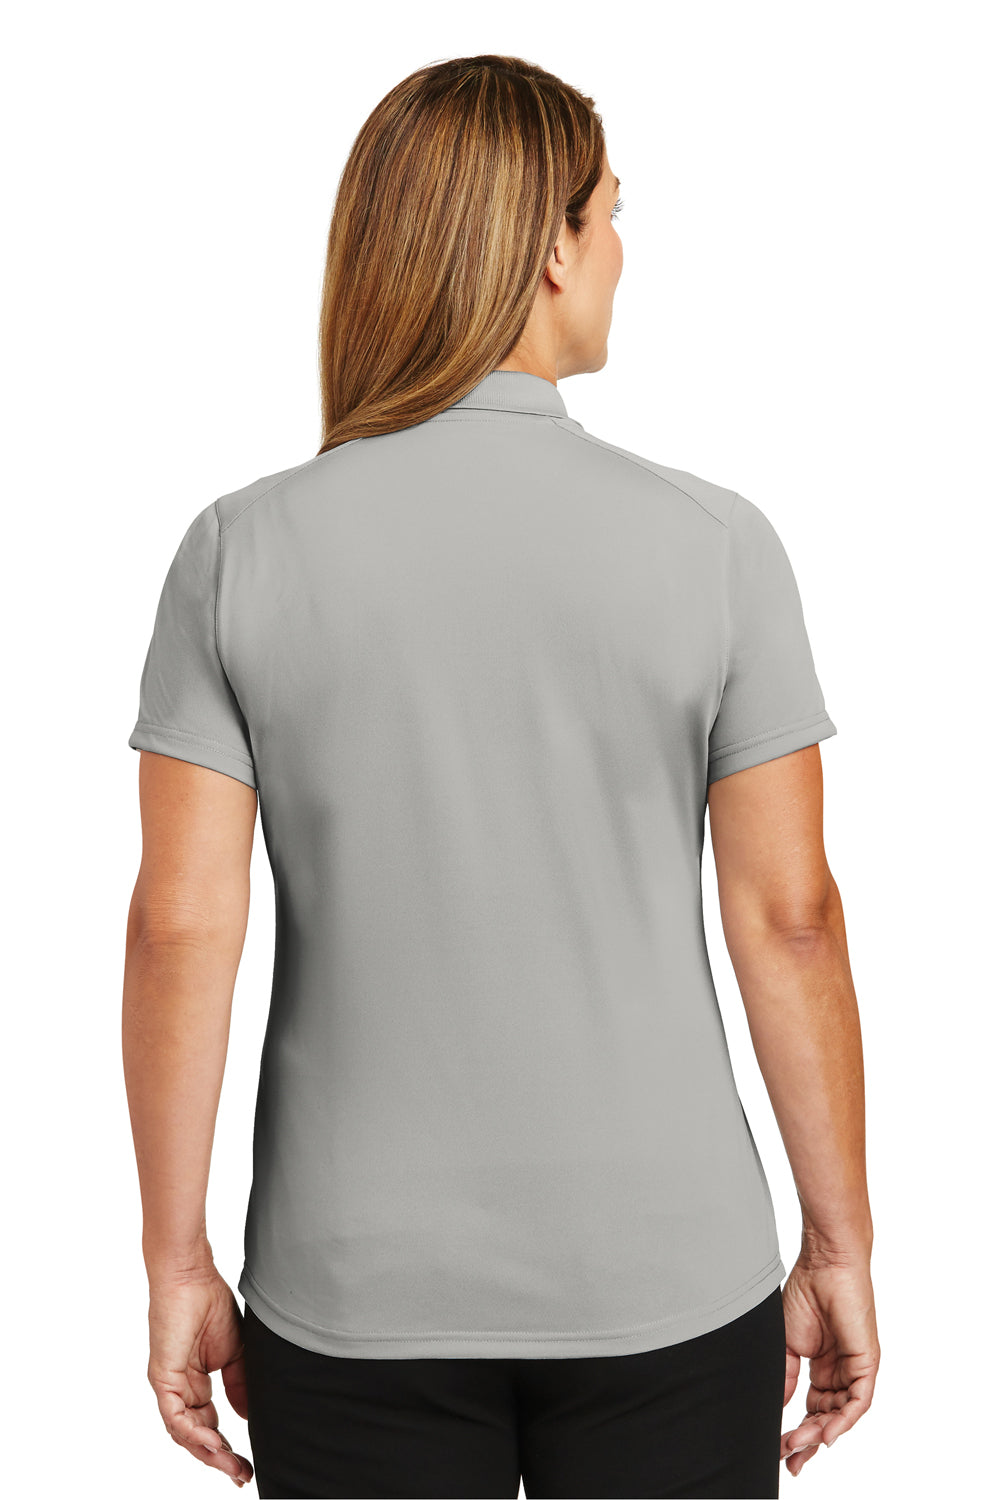 CornerStone CS419 Womens Select Moisture Wicking Short Sleeve Polo Shirt Light Grey Back